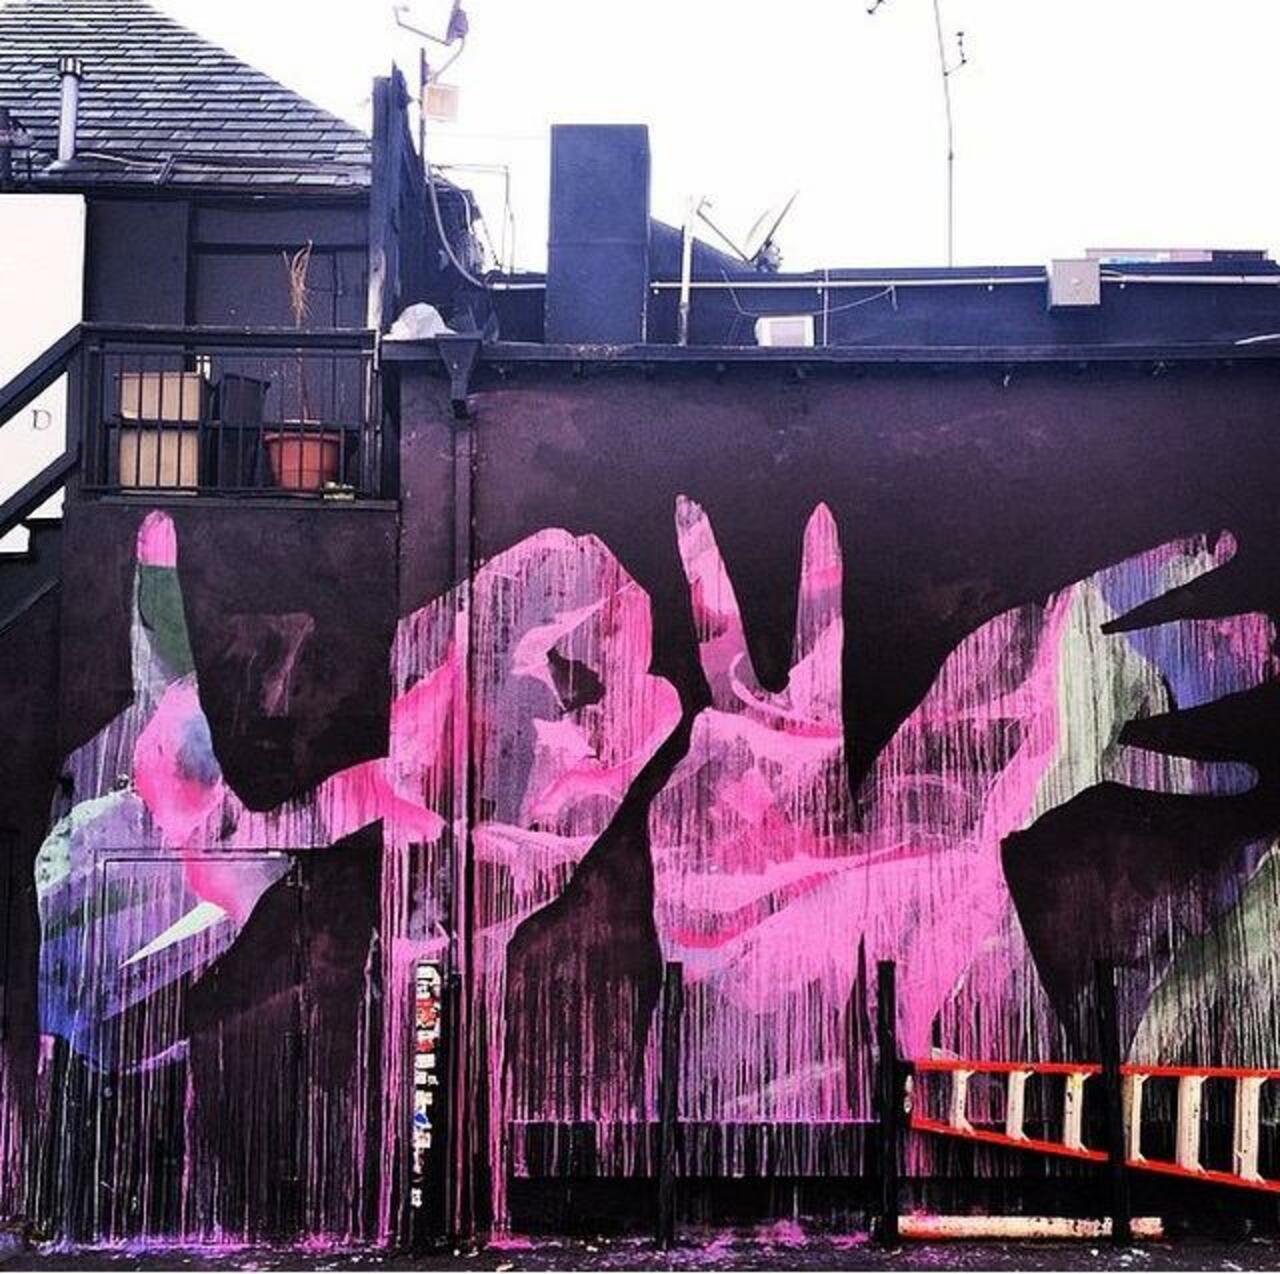 'Love' 
Street Art by Michael Owen ❤️

#art #arte #graffiti #streetart http://t.co/81gDhIljCE